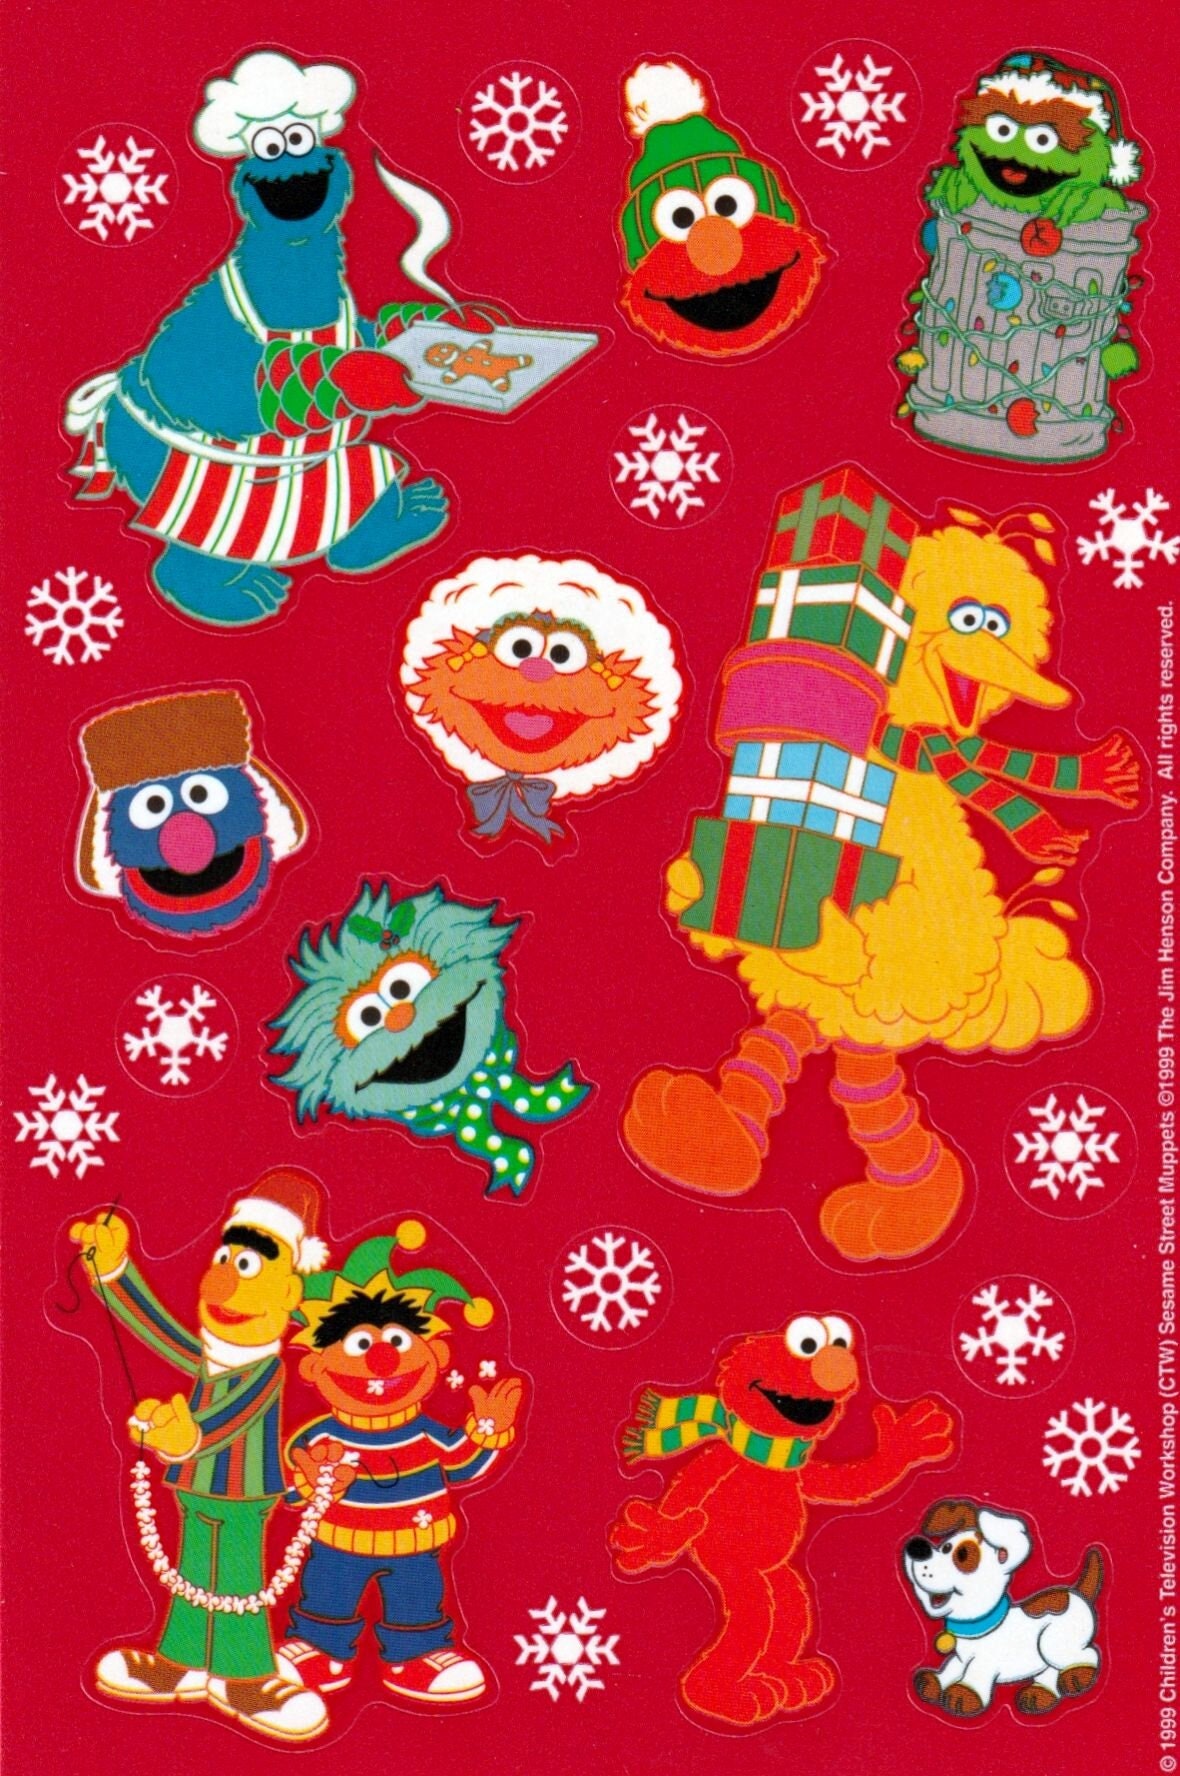 Sesame Street Christmas Wallpapers - Wallpaper Cave